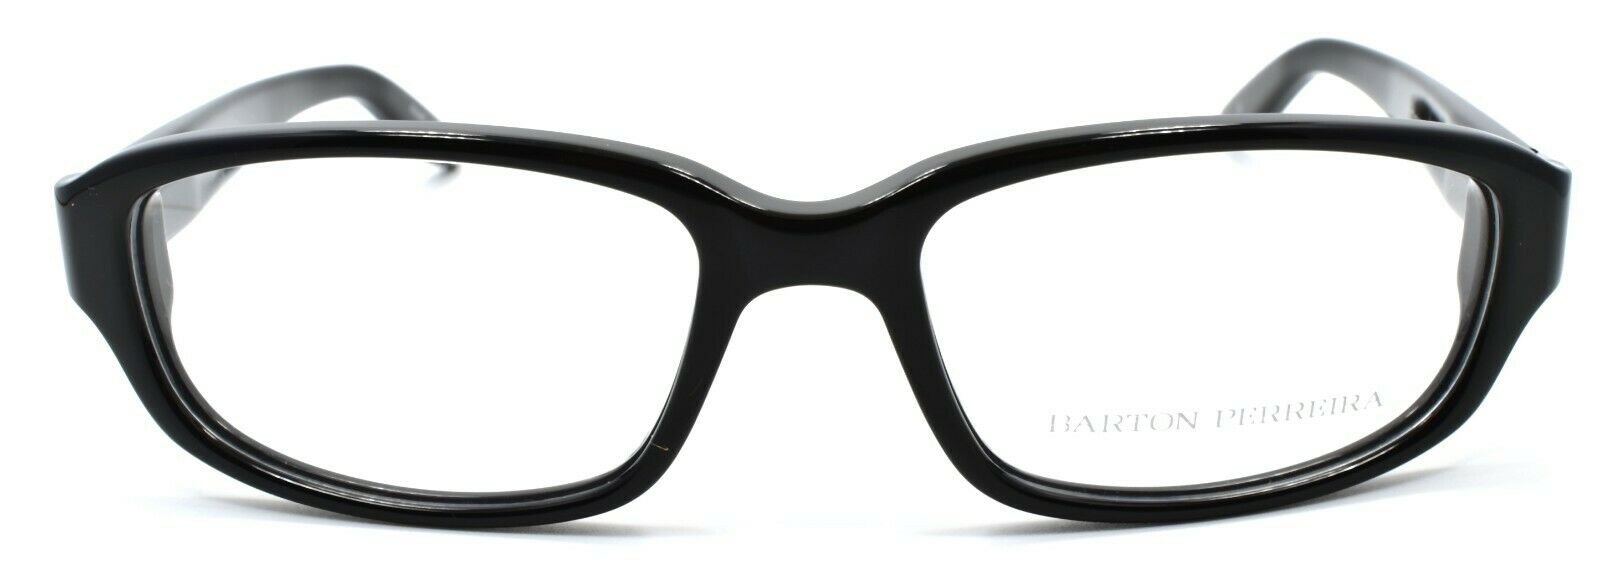 2-Barton Perreira Accomplice BLA Unisex Eyeglasses Frames 55-17-136 Black-672263037651-IKSpecs